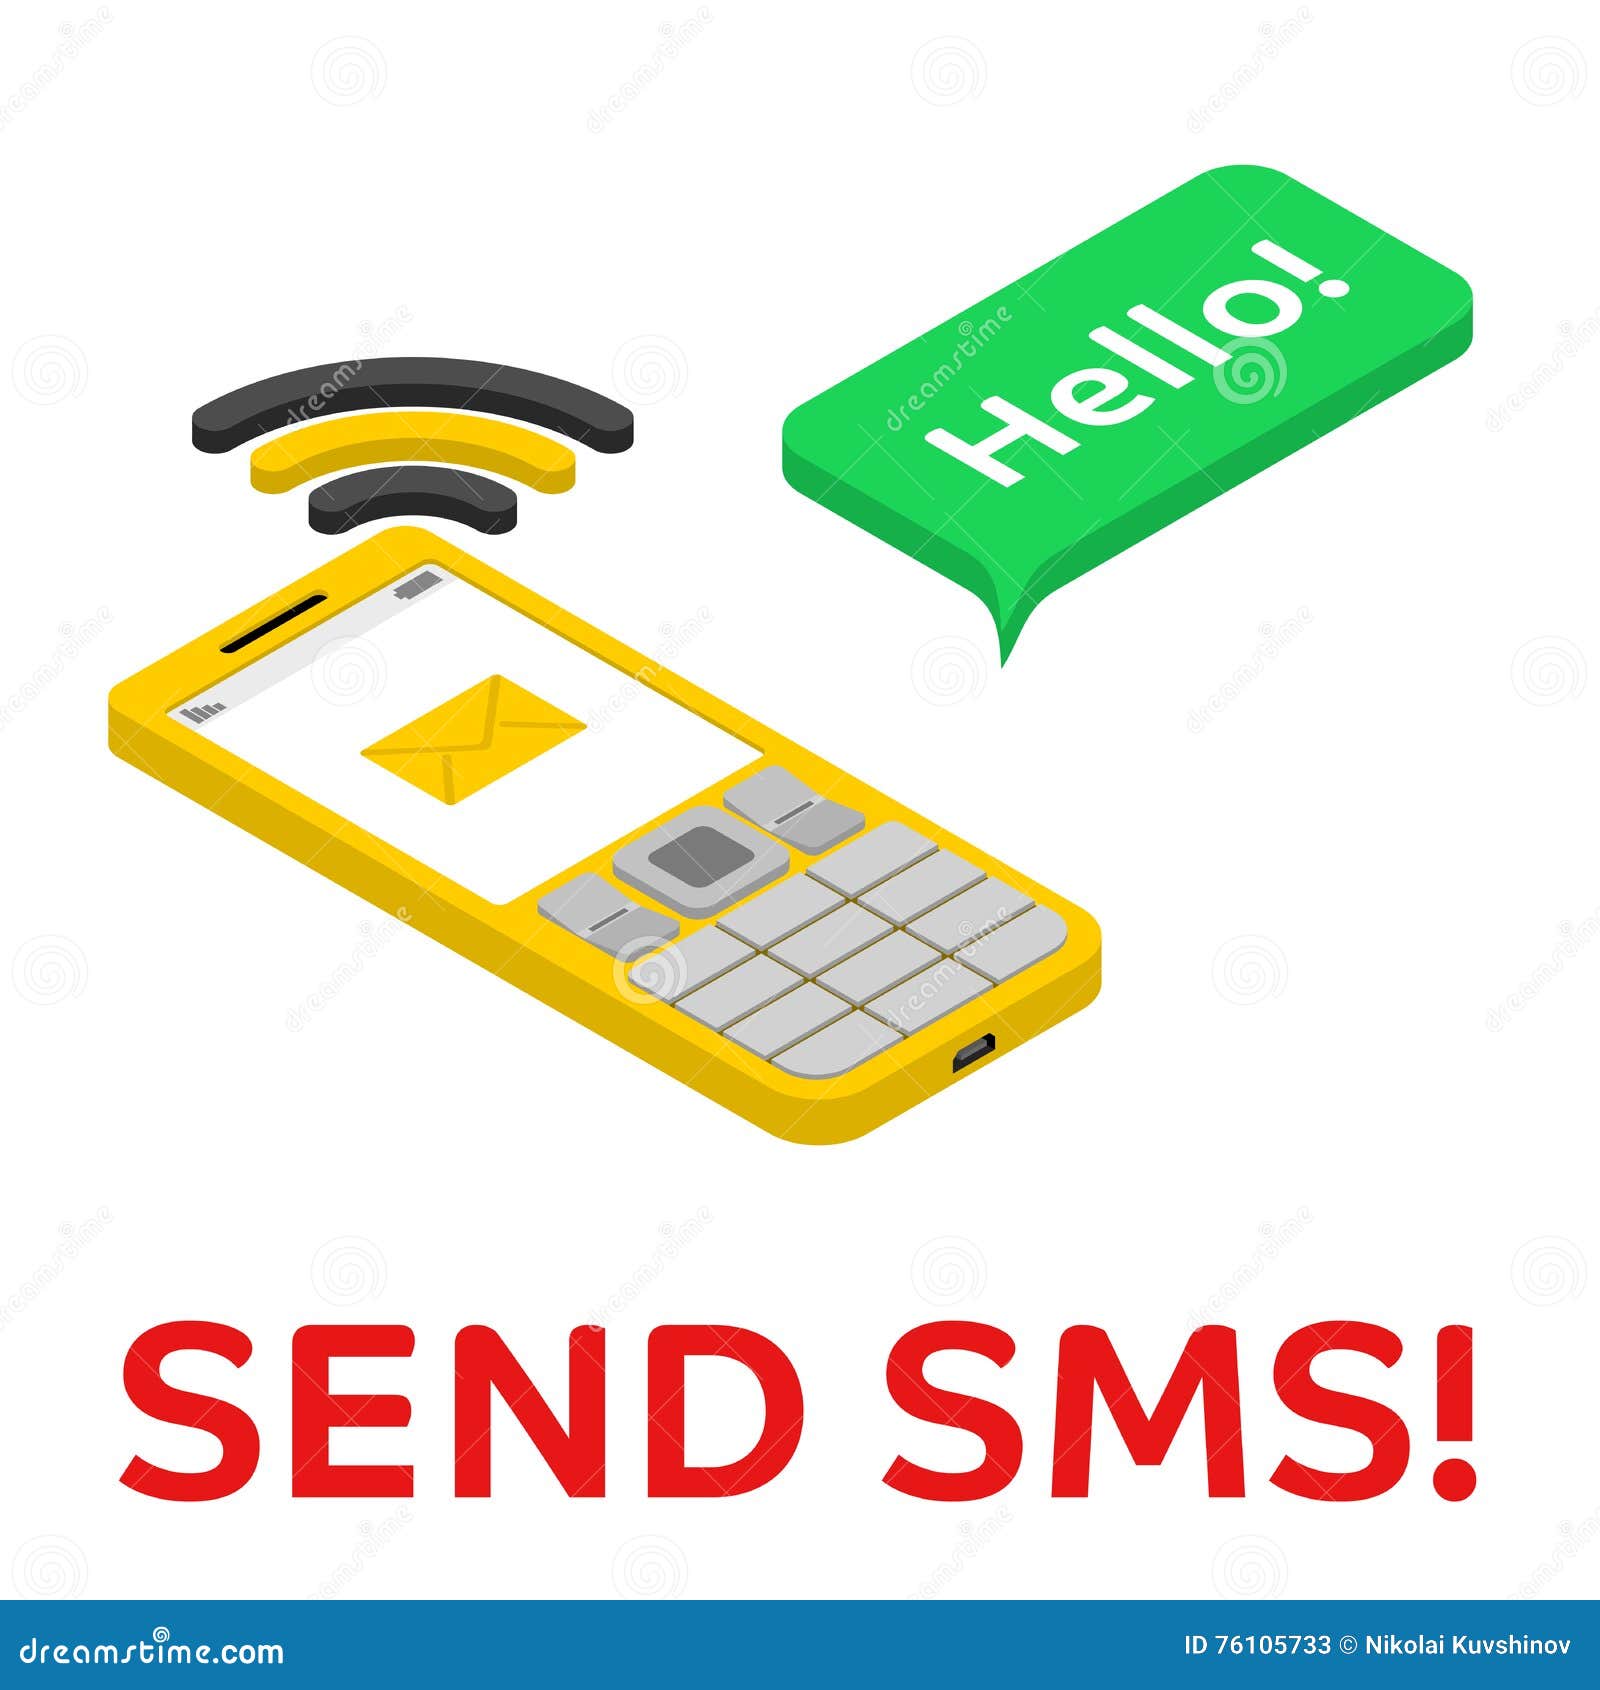 Was send sms. Send SMS. Ohon send SMS PNG.